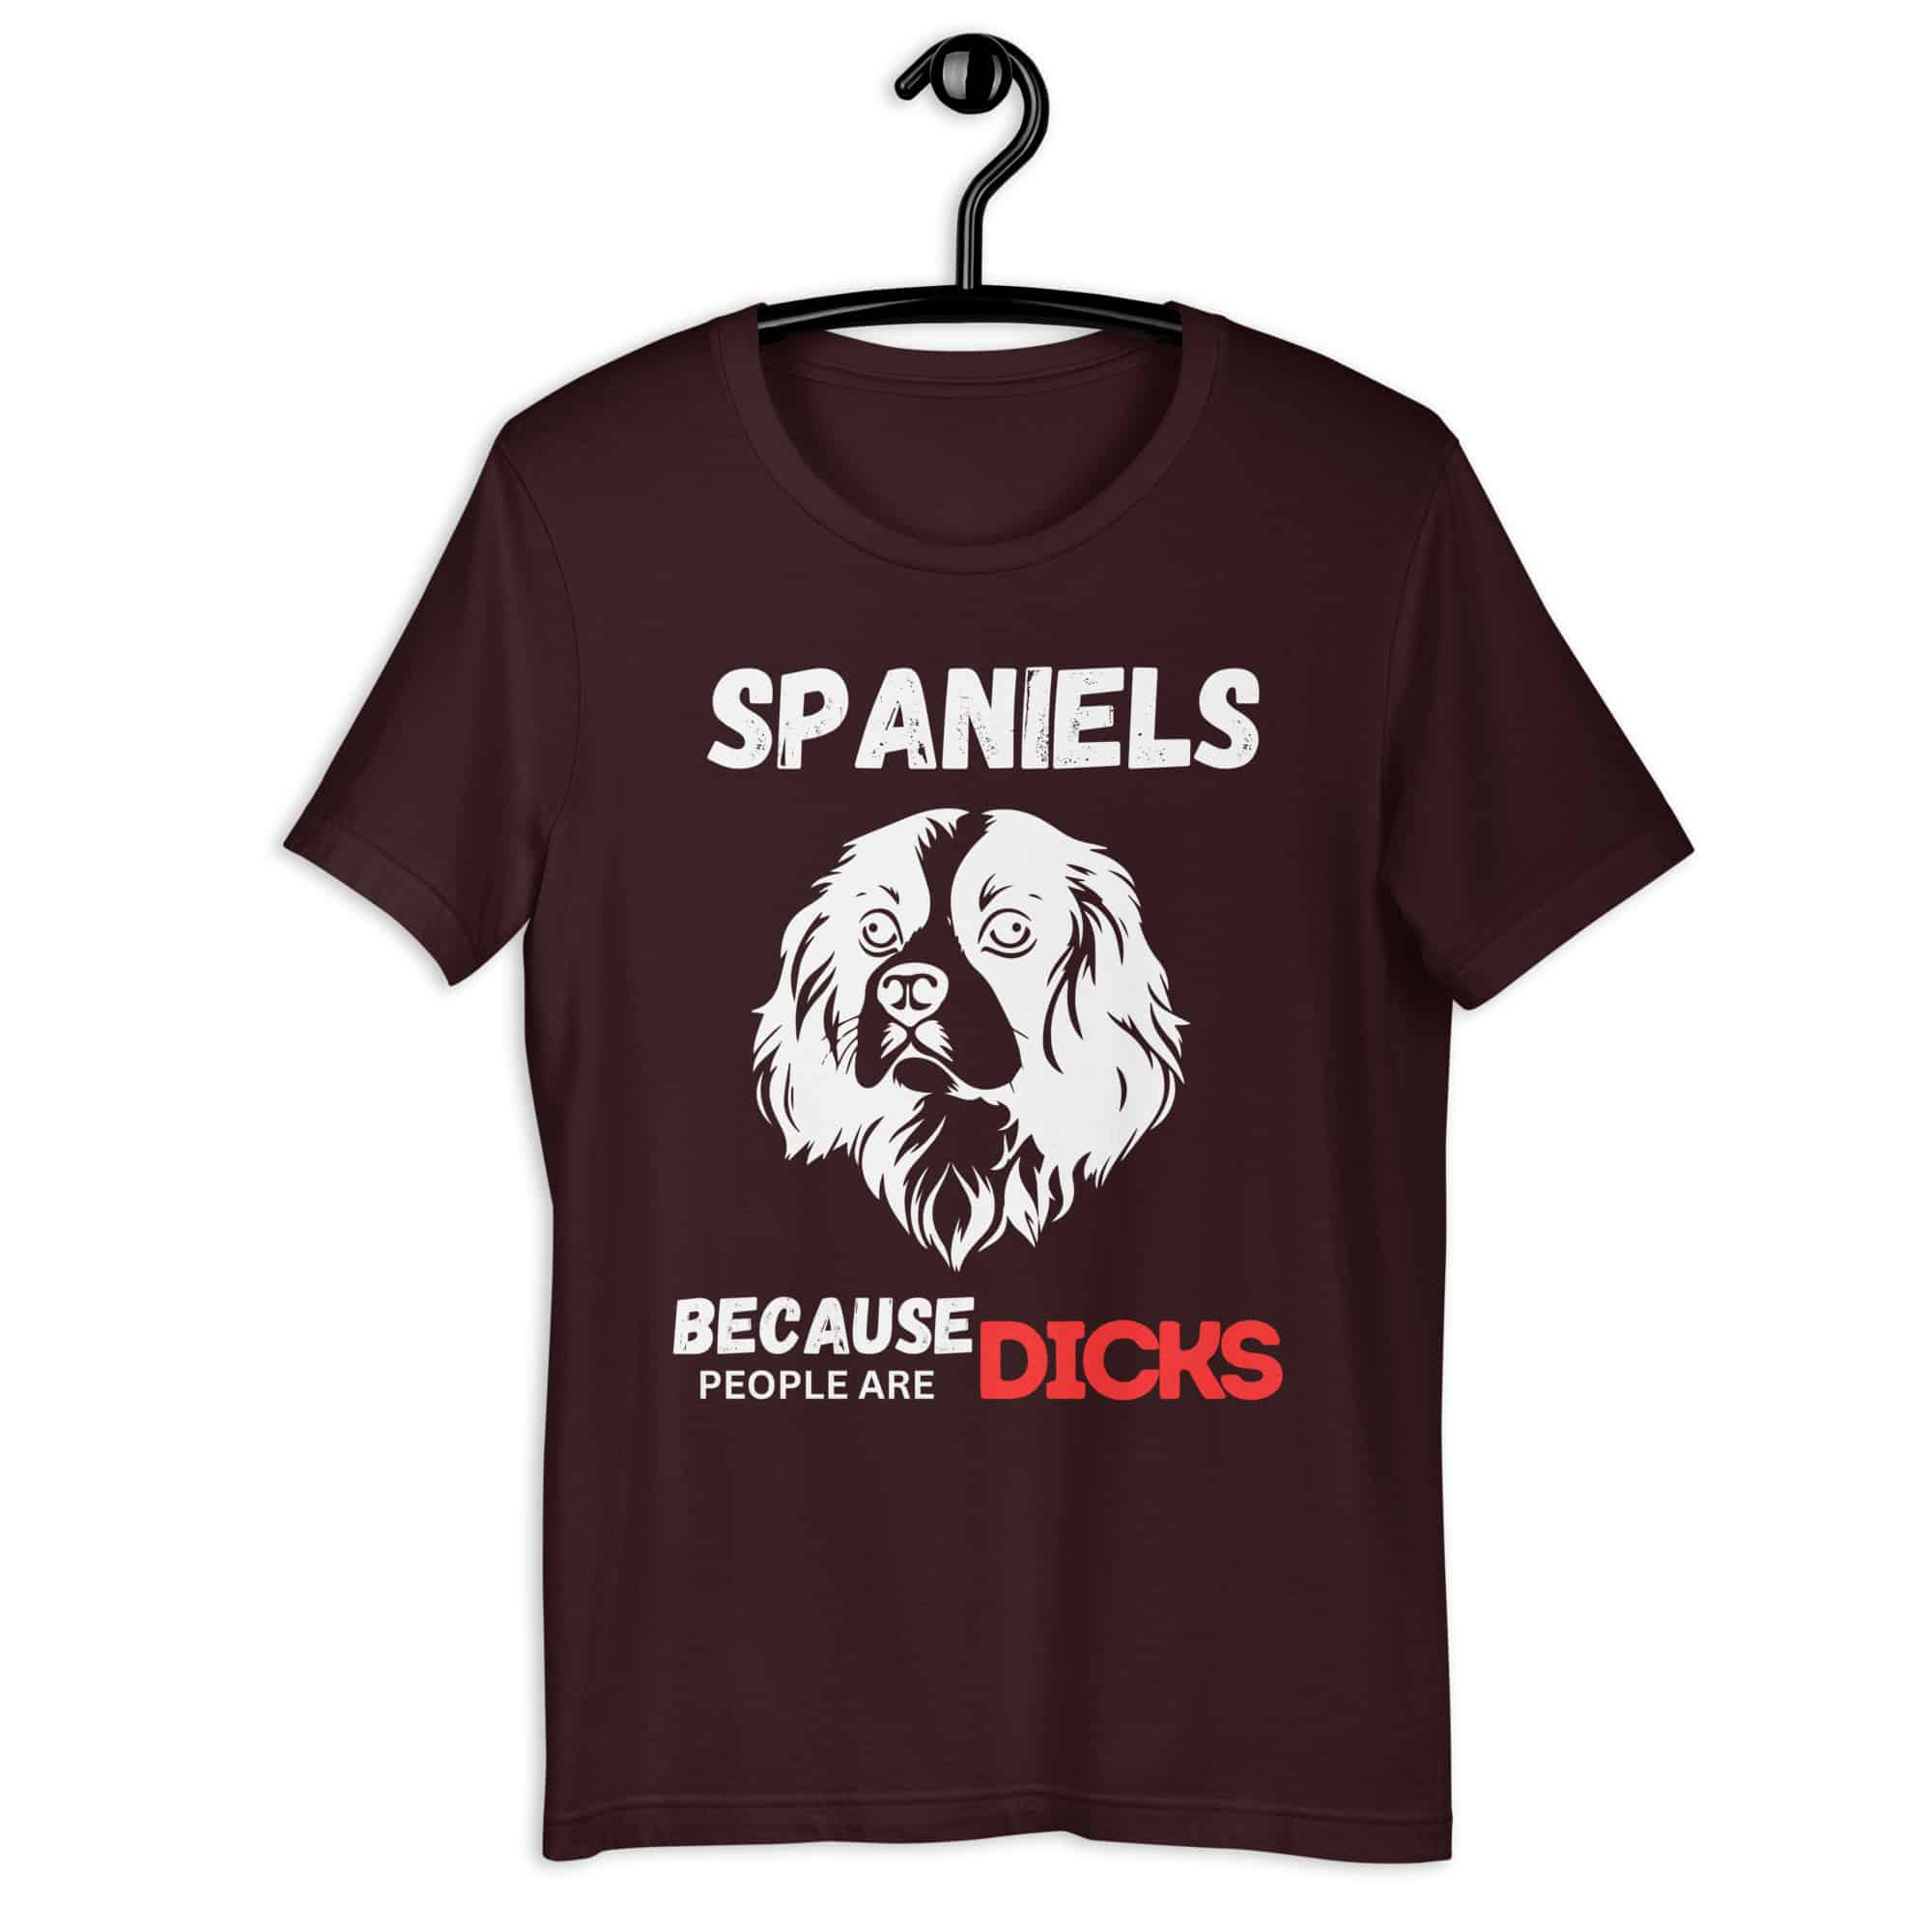 Spaniels Because People Are Dicks Unisex T-Shirt Dark Brown